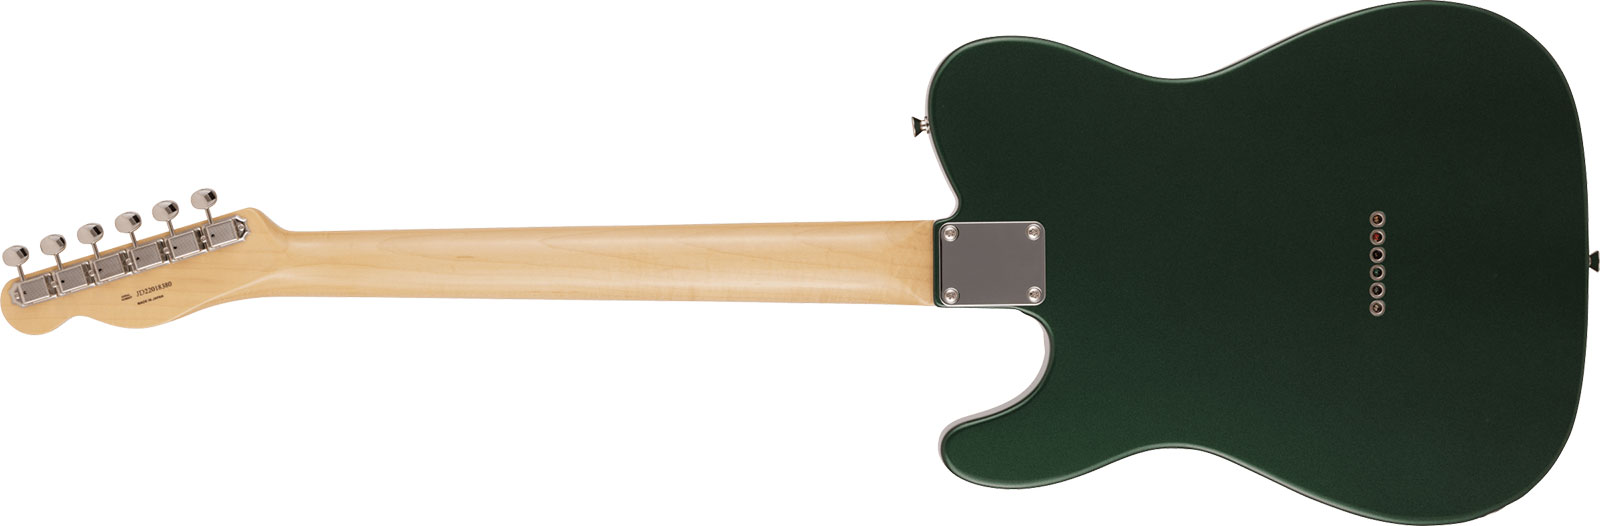 Fender Tele Traditional 60s Mij 2s Ht Rw - Aged Sherwood Green Metallic - Tel shape electric guitar - Variation 1